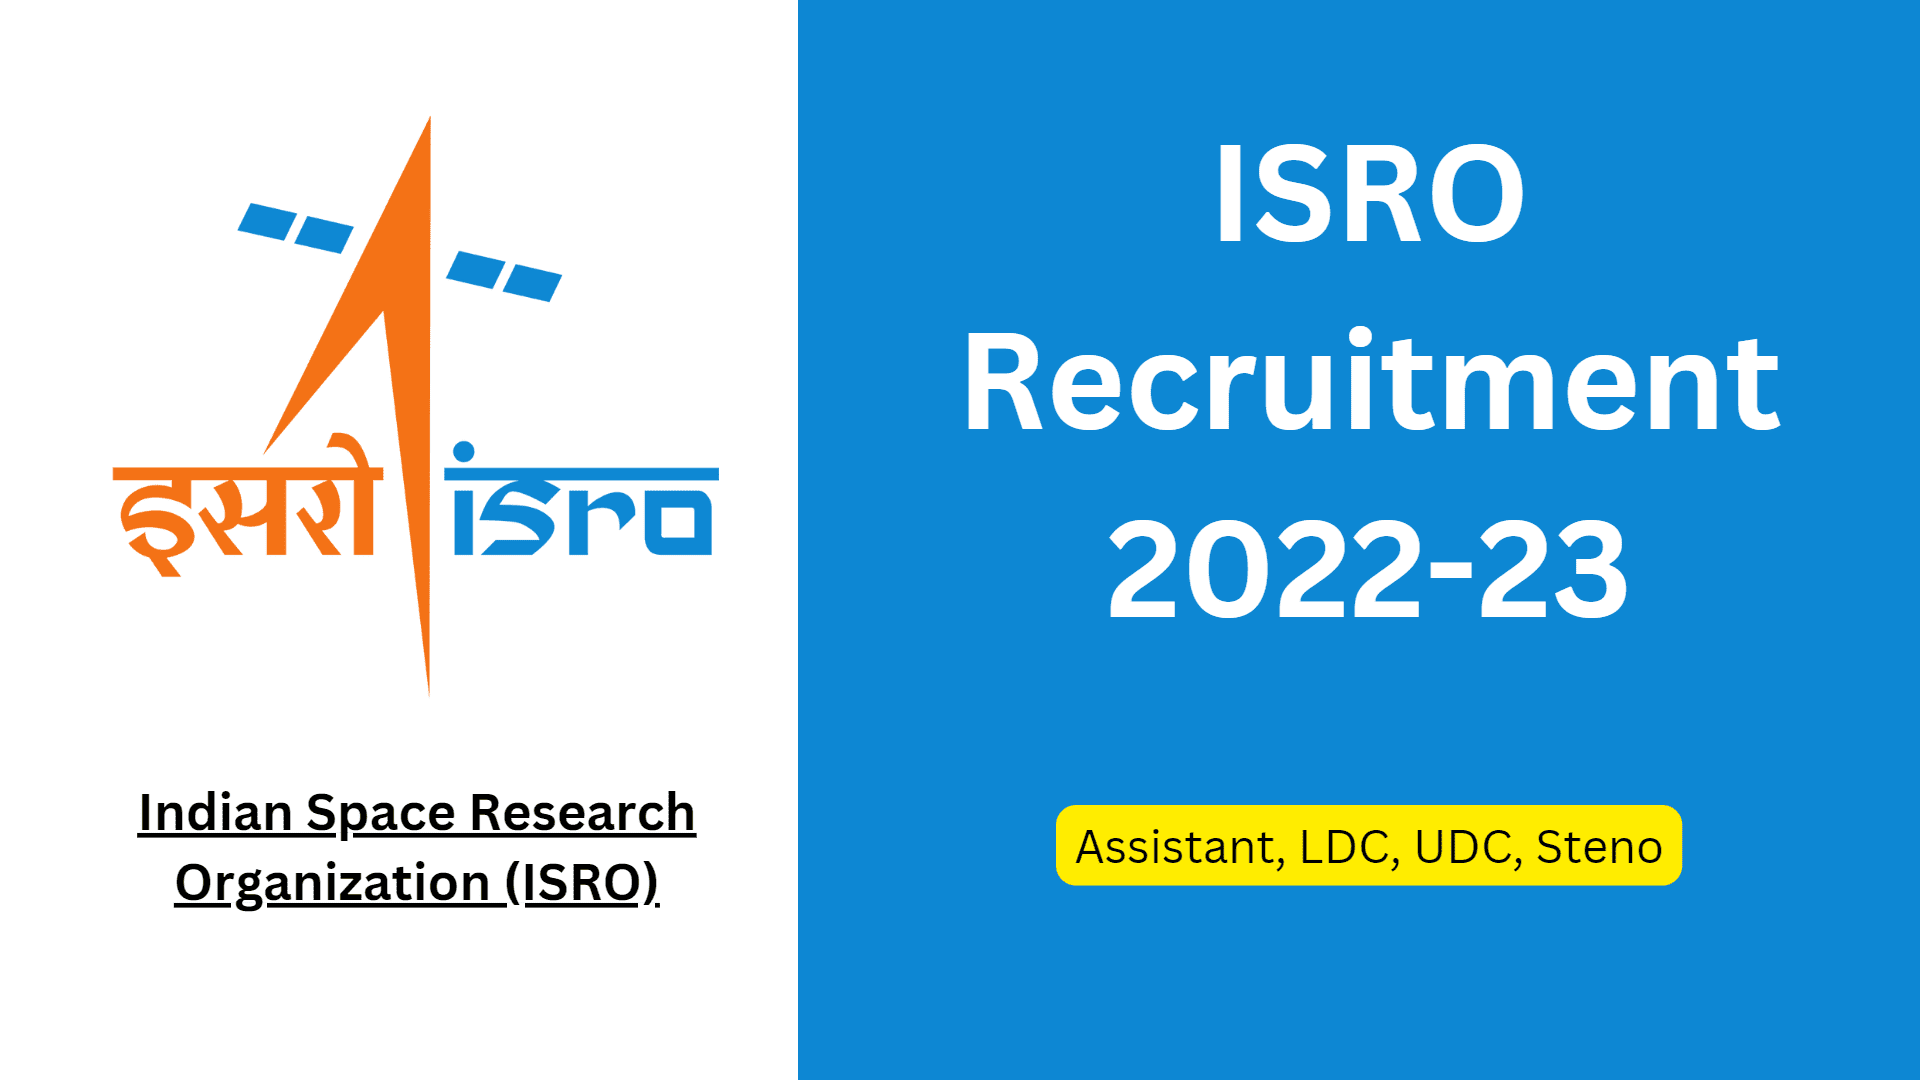 ISRO Recruitment 2022-23